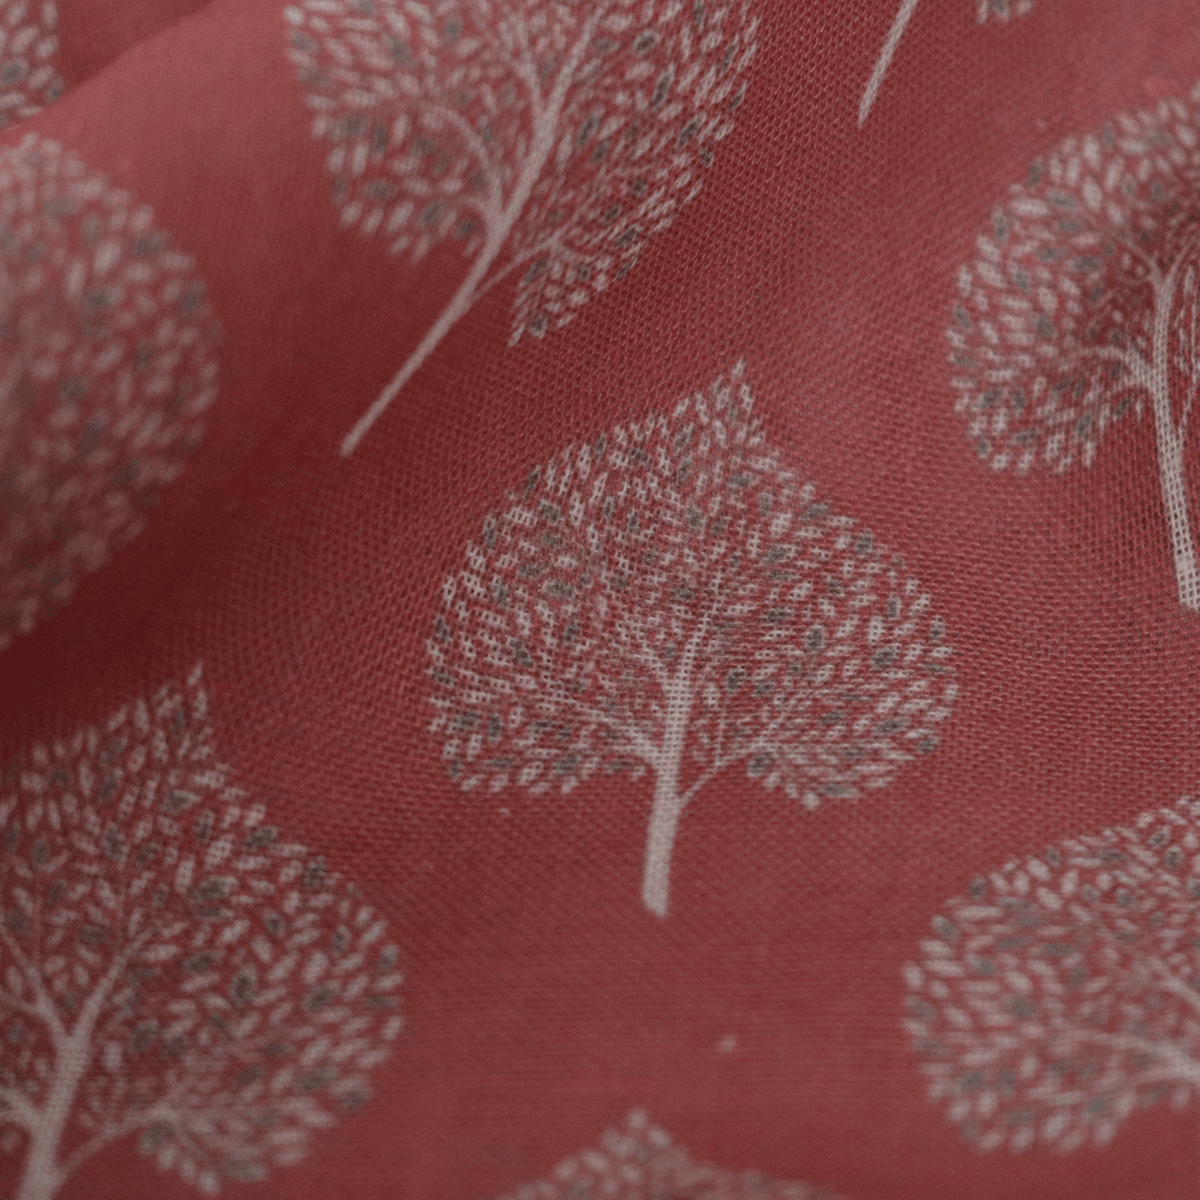 Simply Mimi Leaves Pattern Digital Printed Fabric - Linen - FAB VOGUE Studio®